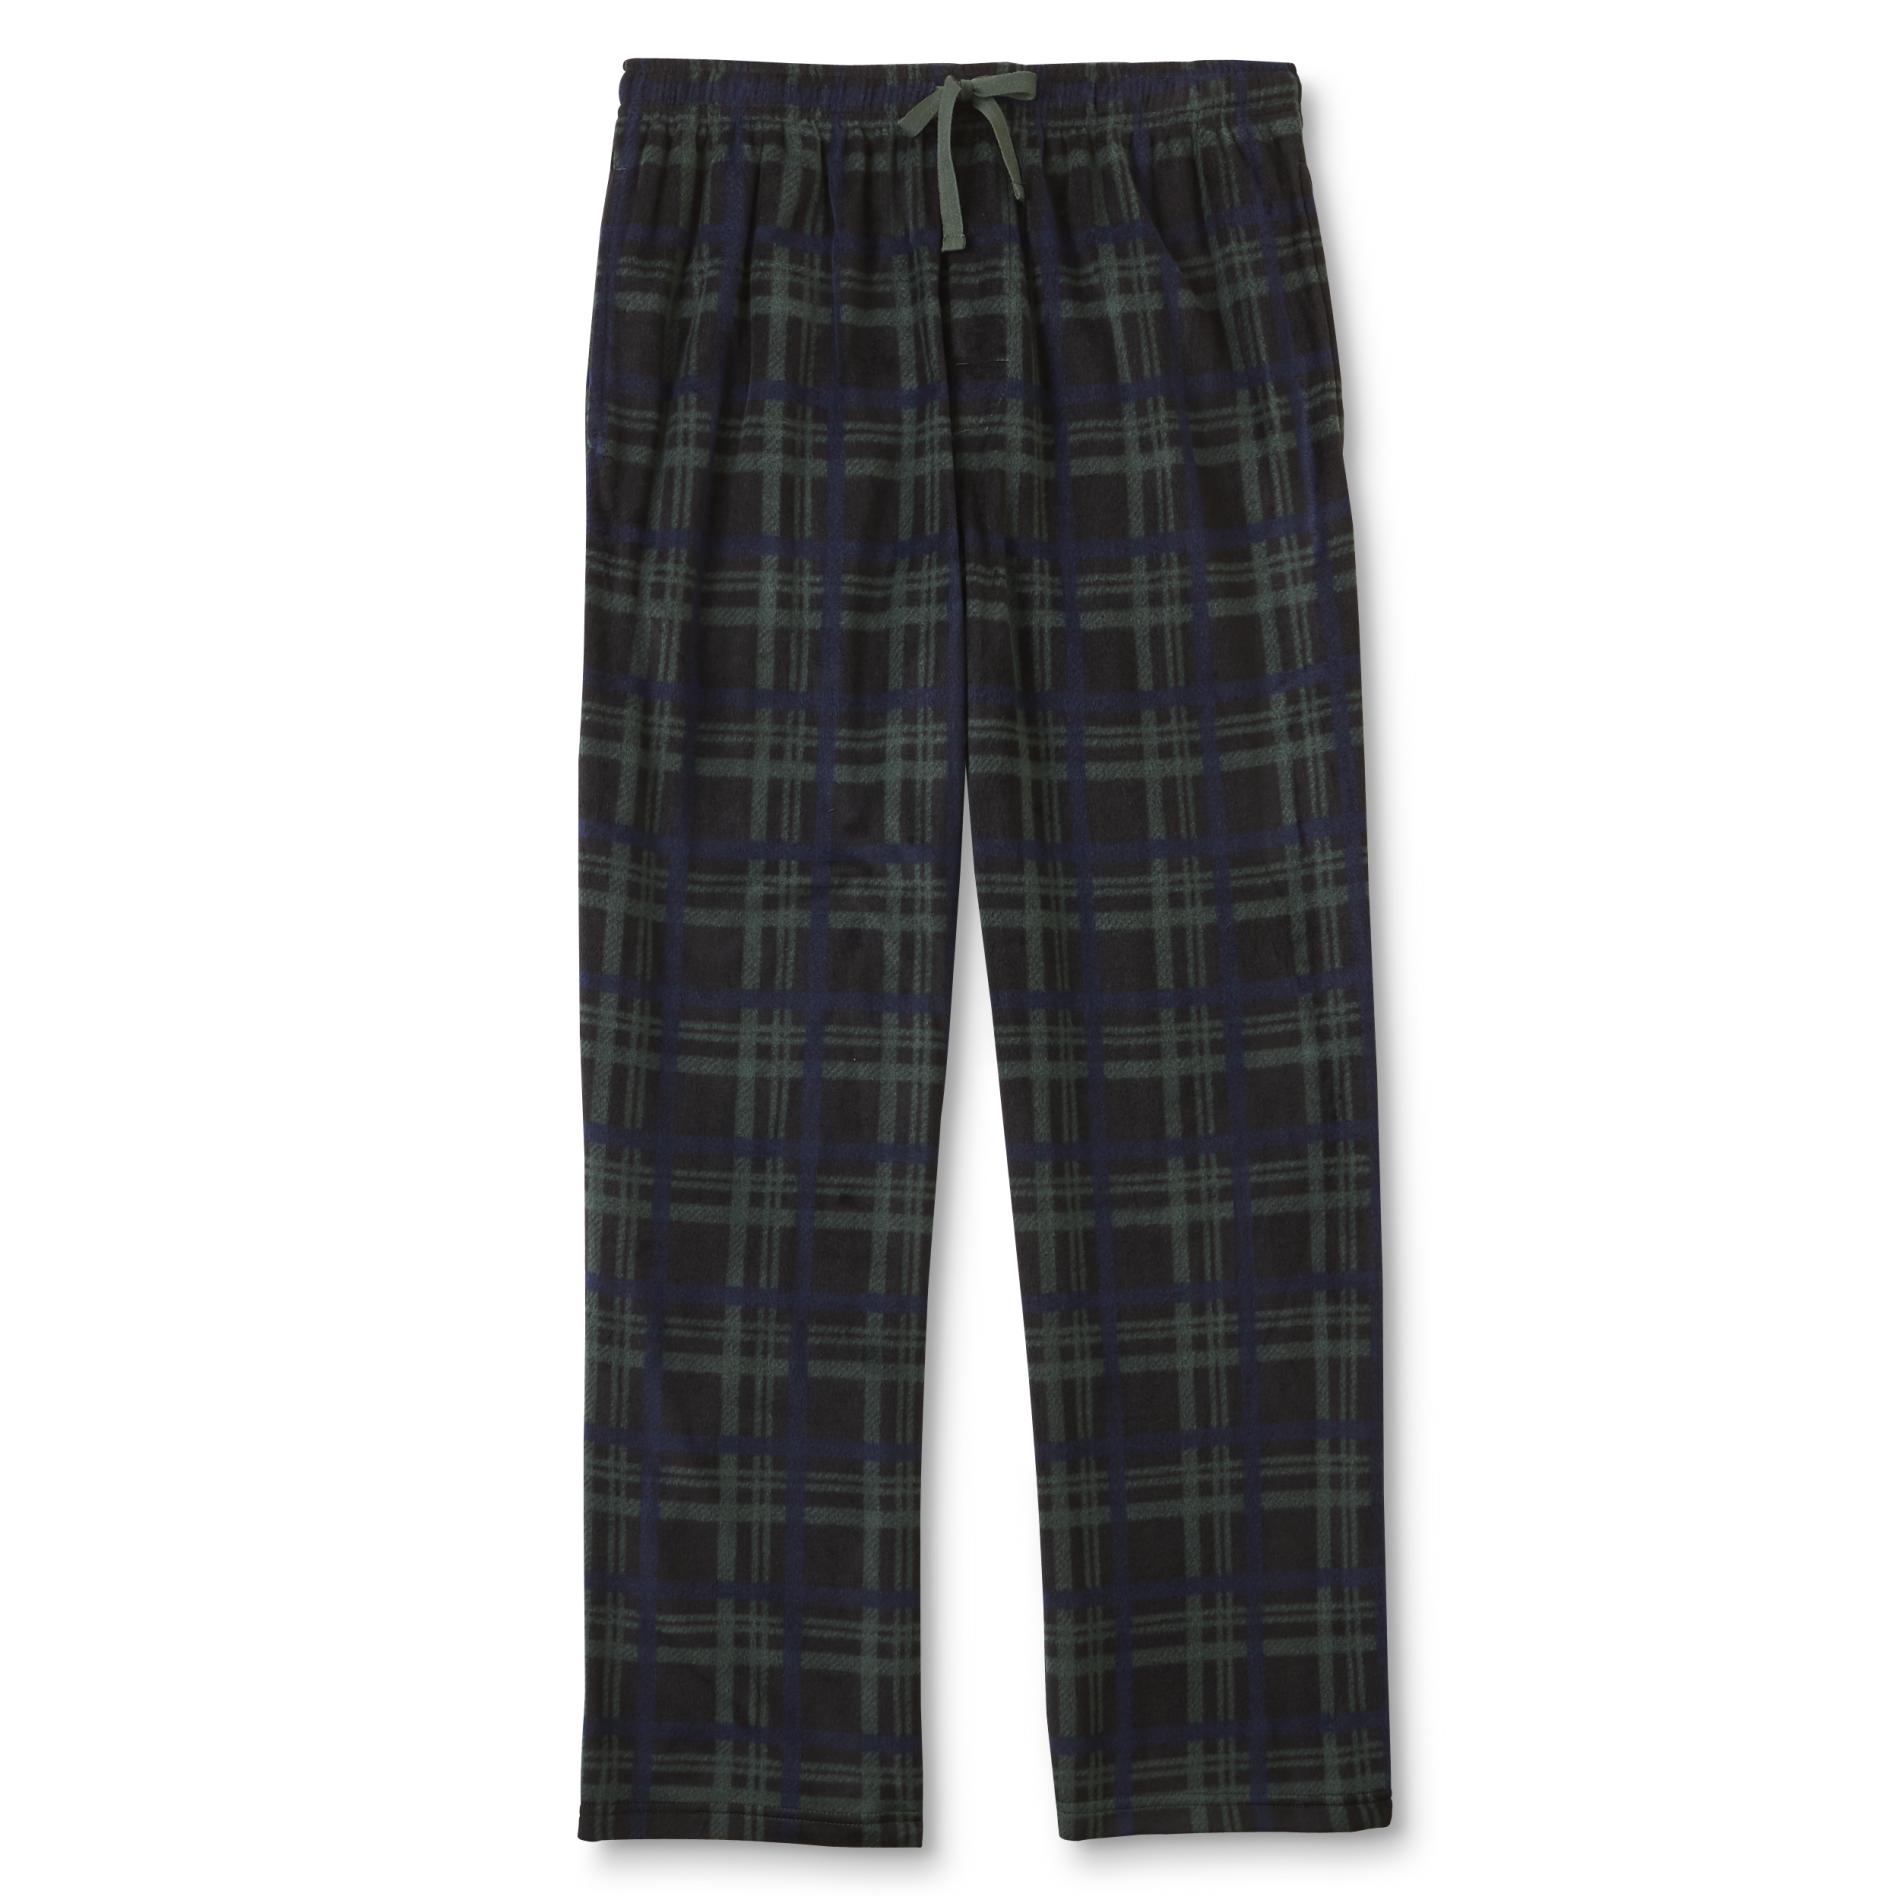 Joe Boxer Men's Minky Fleece Pajama Pants - Plaid